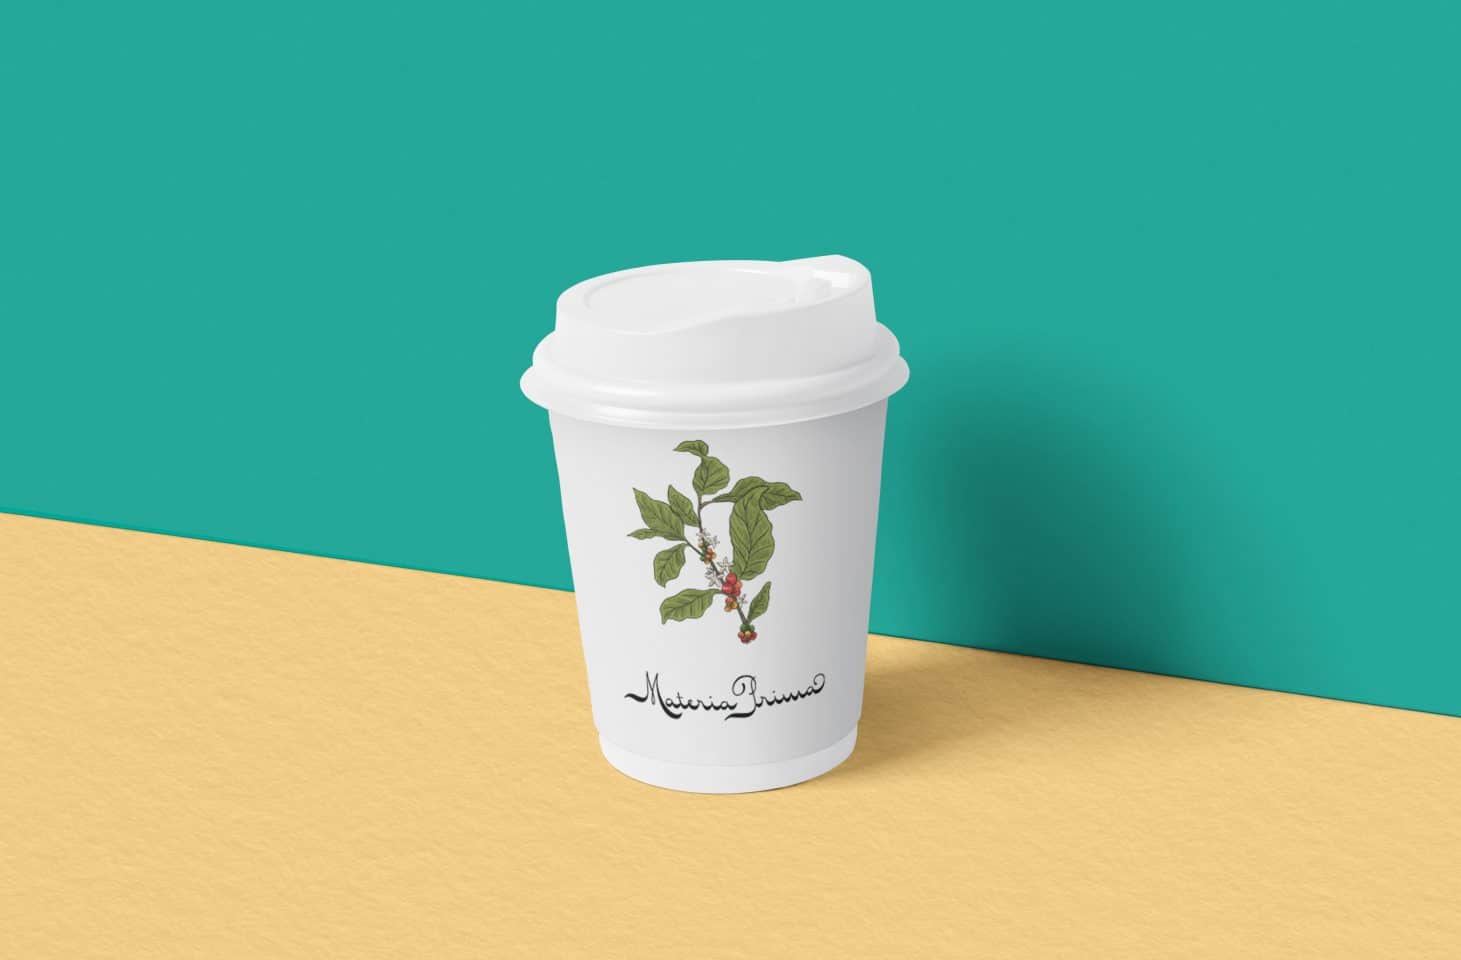 Materia Prima logo and coffee branch illustration on a to-do espresso mug